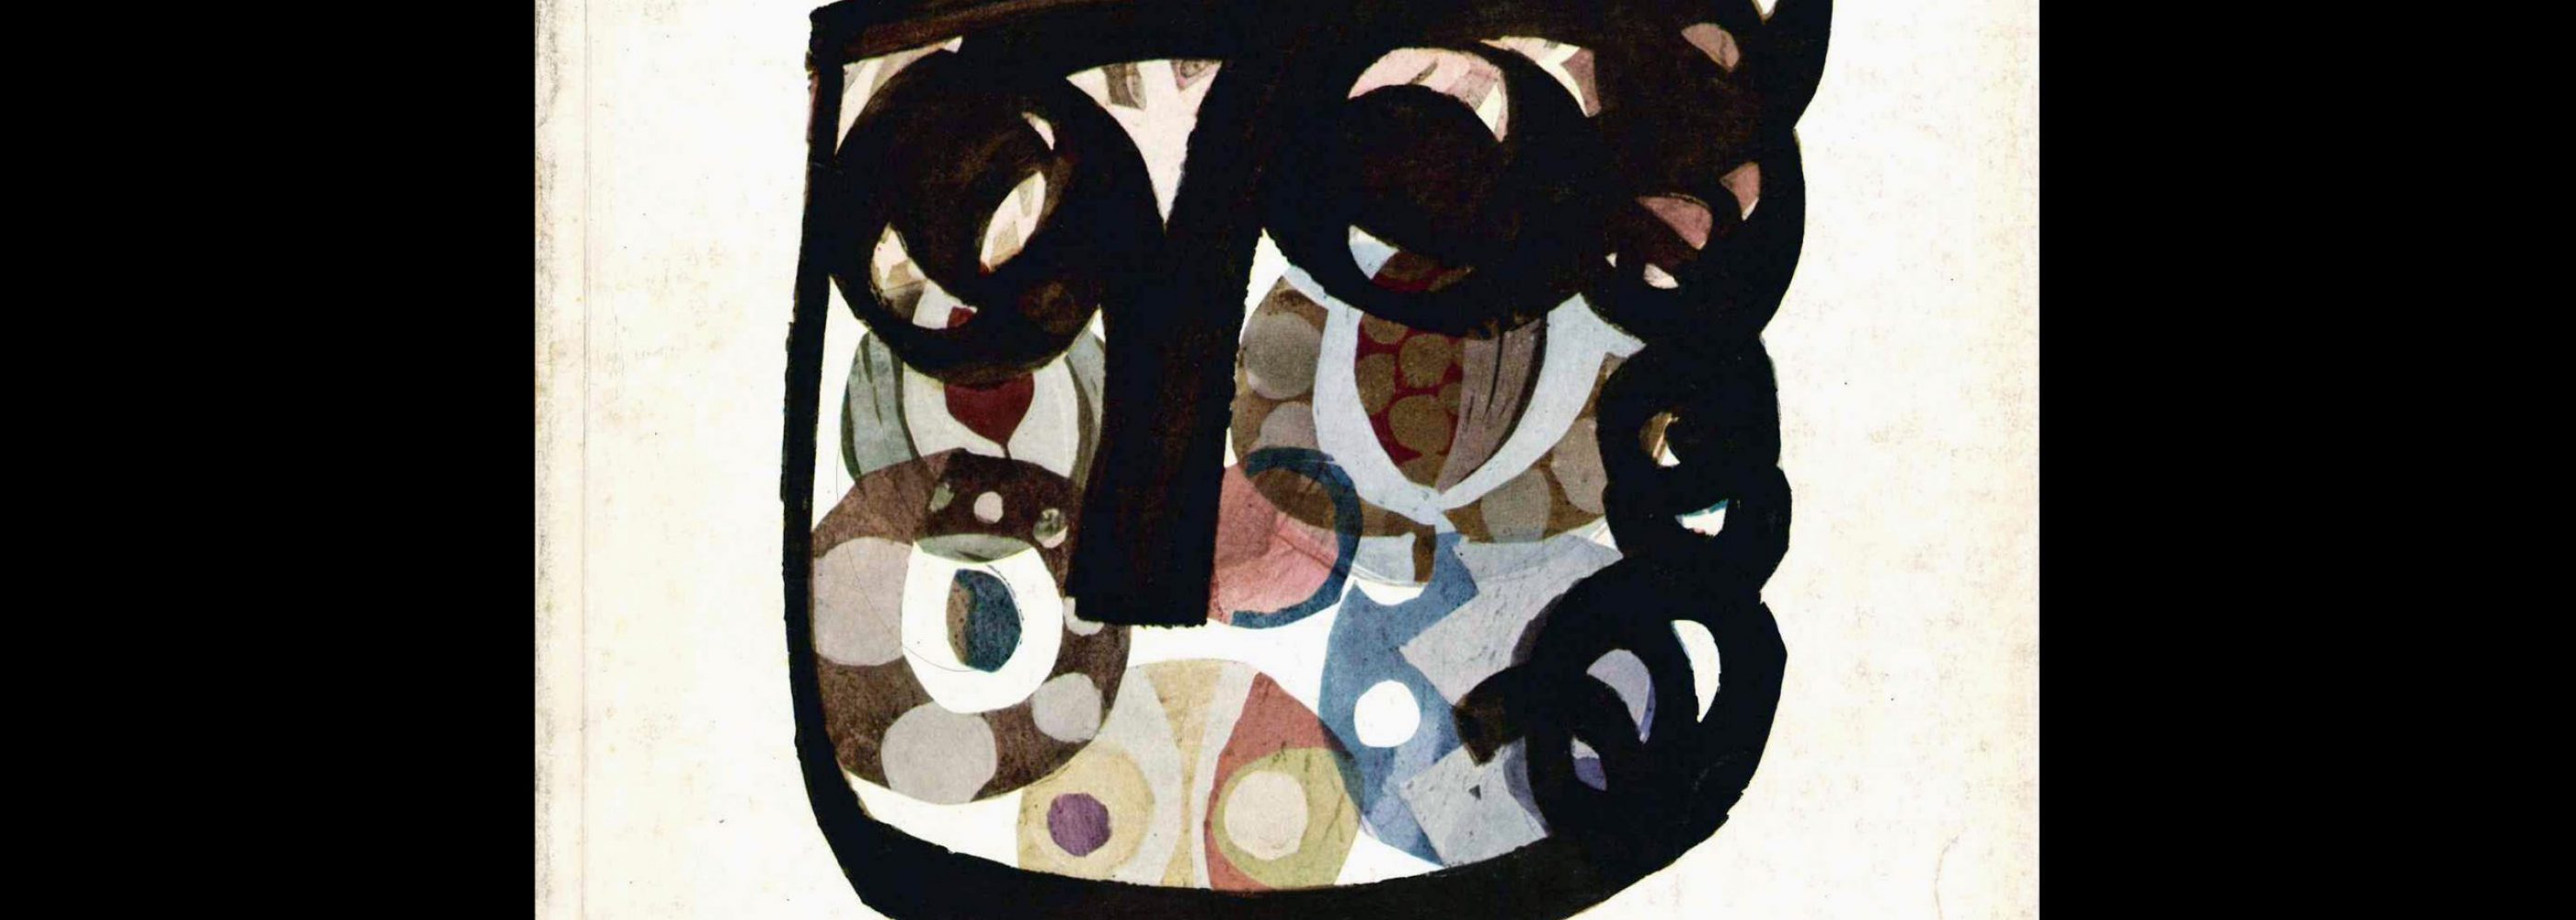 Gebrauchsgraphik, 10, 1966. Cover design by Tomás Vellvé